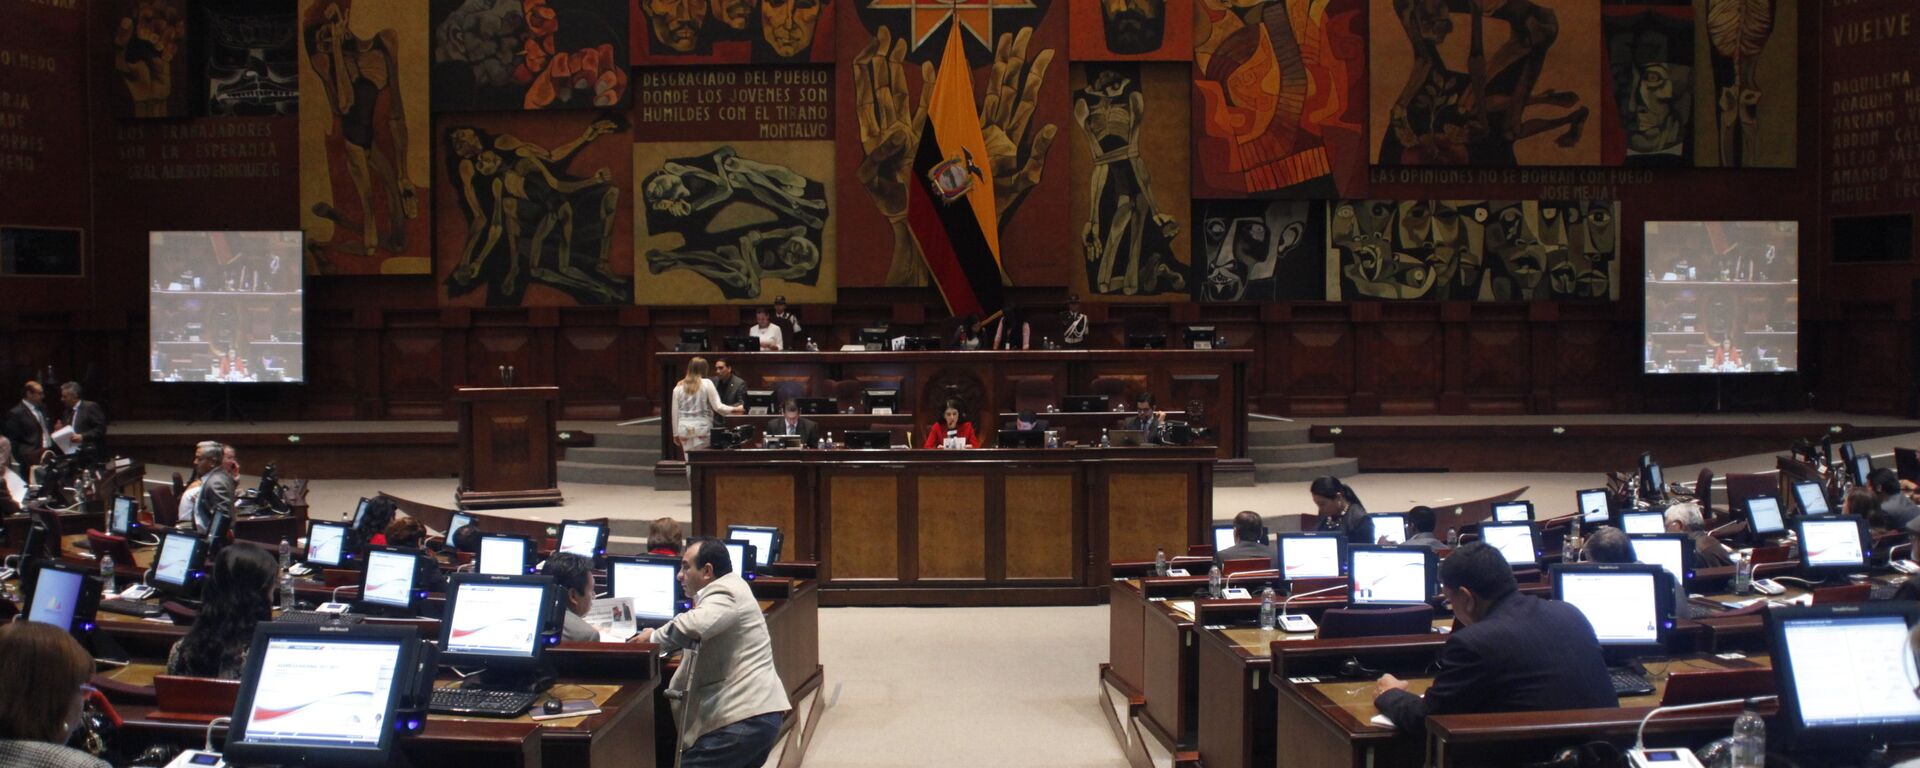 La Asamblea Nacional de Ecuador (archivo) - Sputnik Mundo, 1920, 18.03.2021